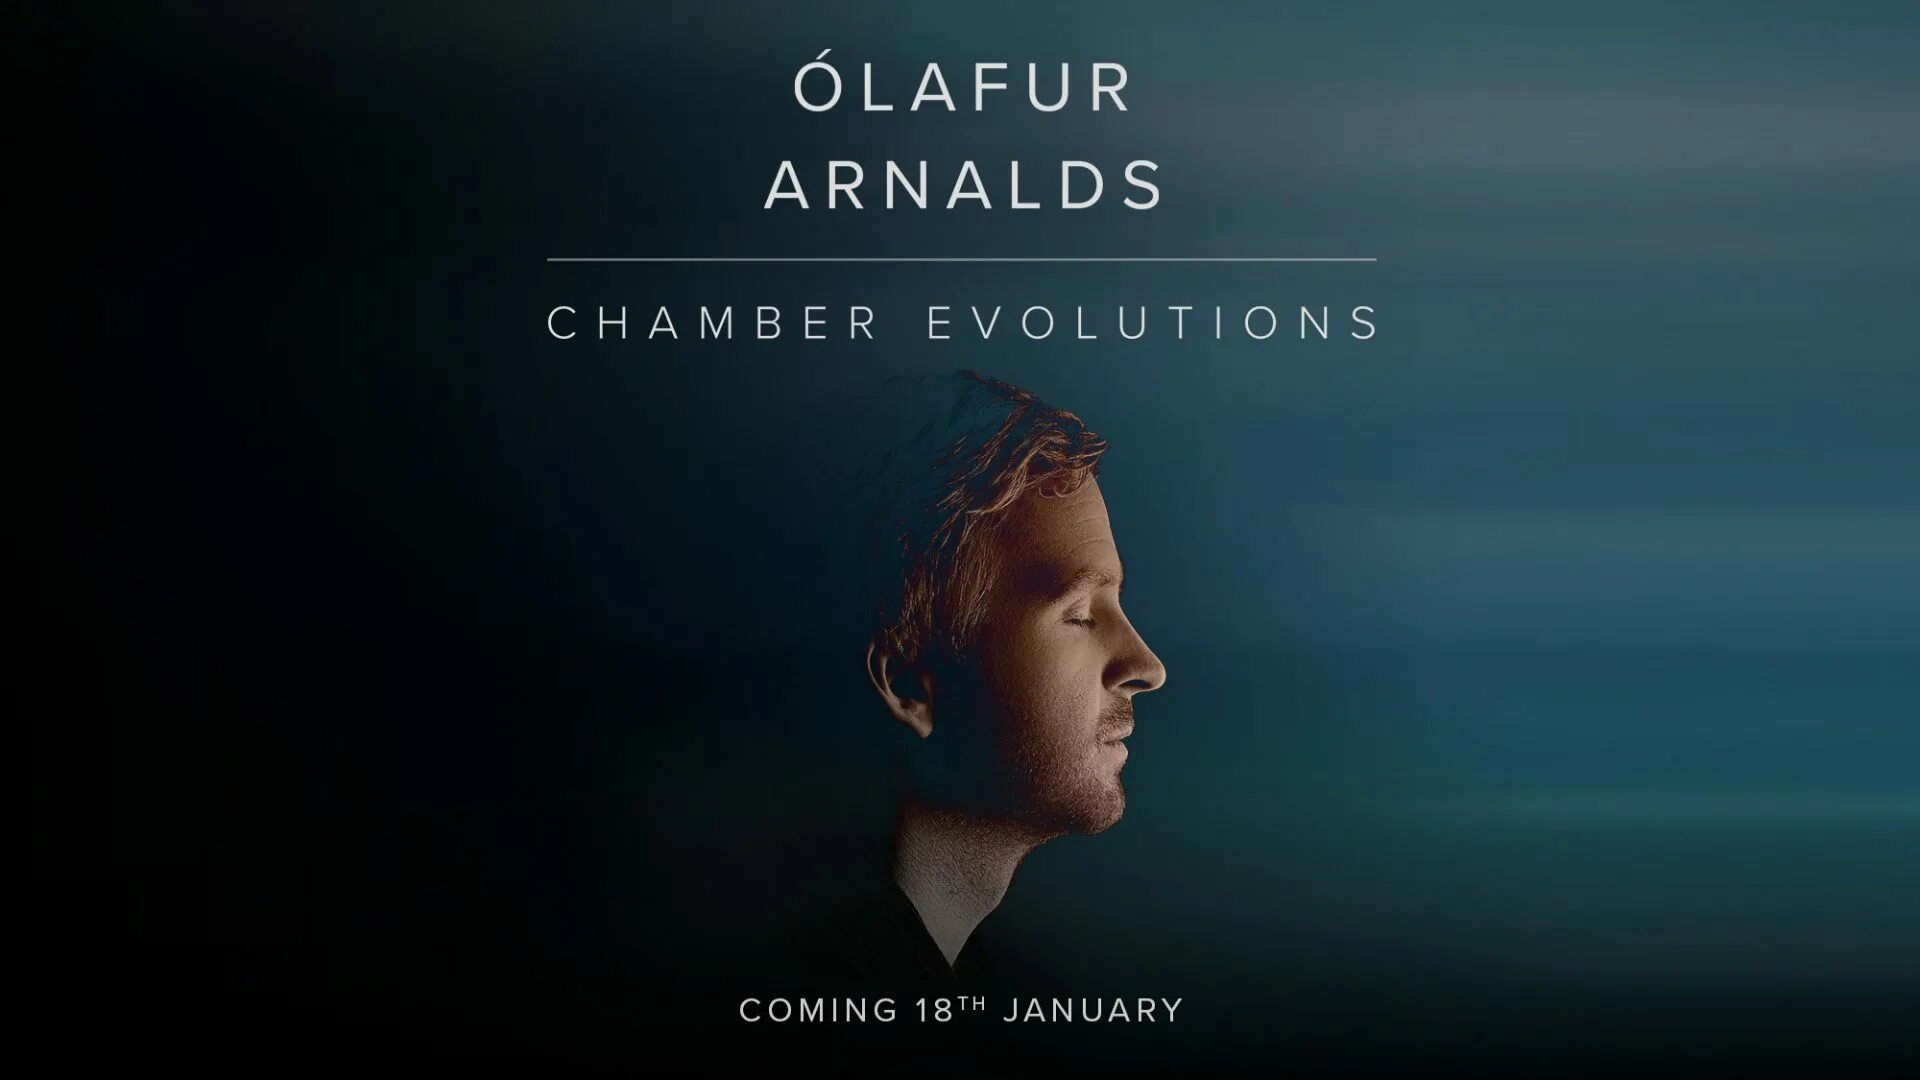 Олафур Арналдс. Spitfire Audio - Olafur Arnalds Chamber Evolutions. Spitfire Audio - Olafur Arnalds Stratus. Олафур Эллисон ar. Arriving 18